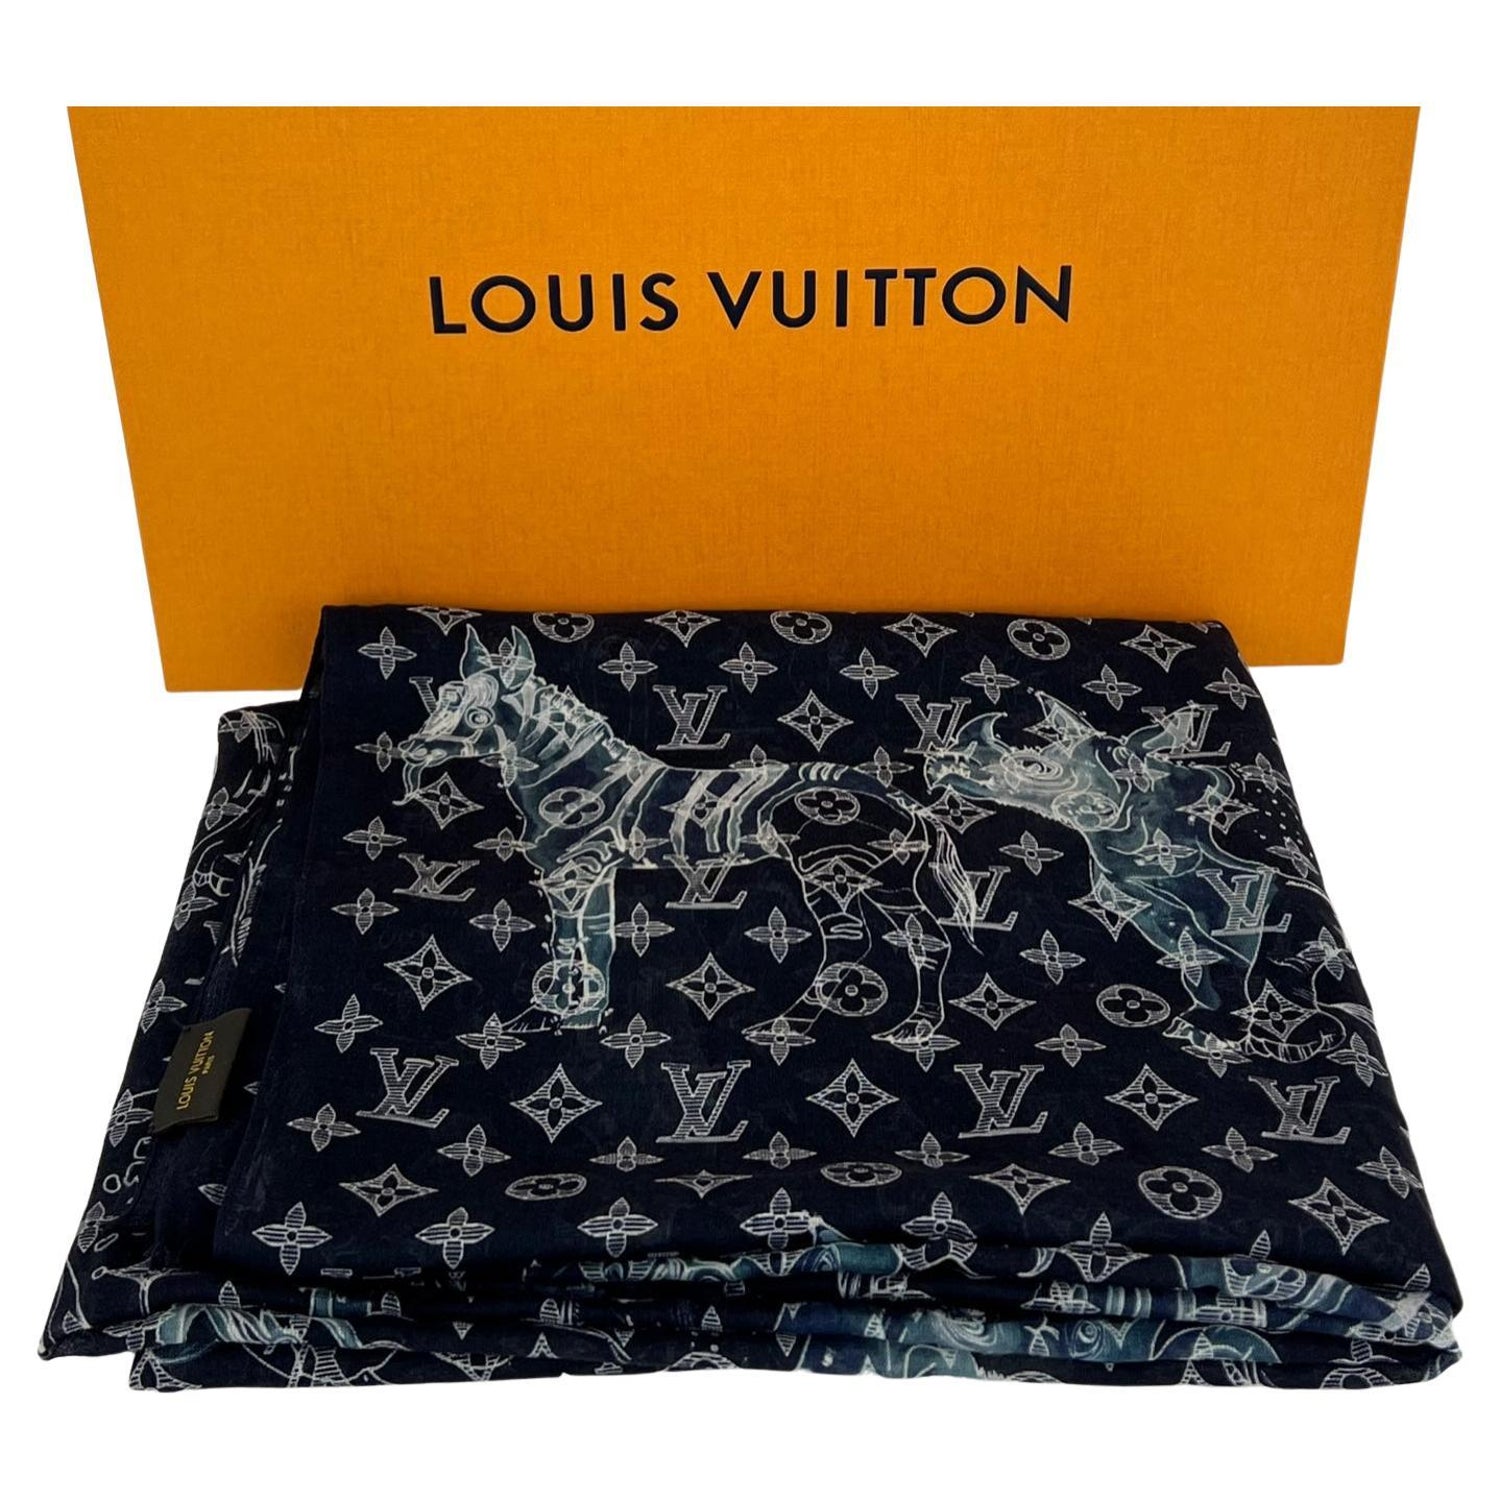 Louis Vuitton Animal Print - 5 For Sale on 1stDibs